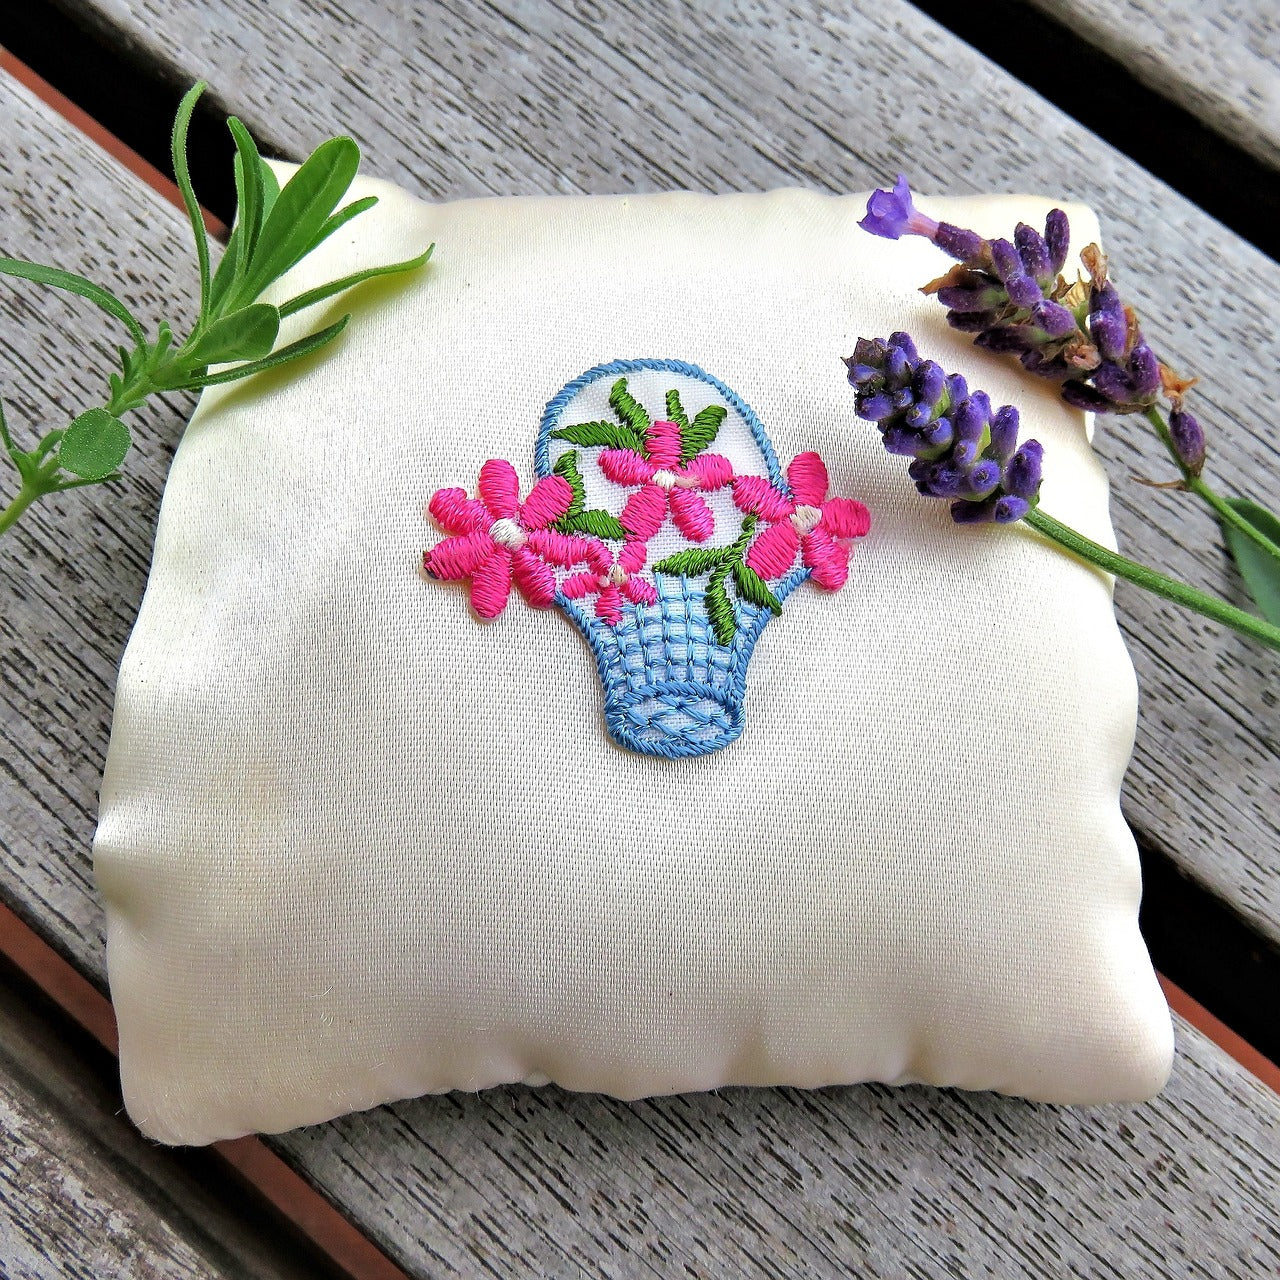 A purple flower lies on an embroidered pillow